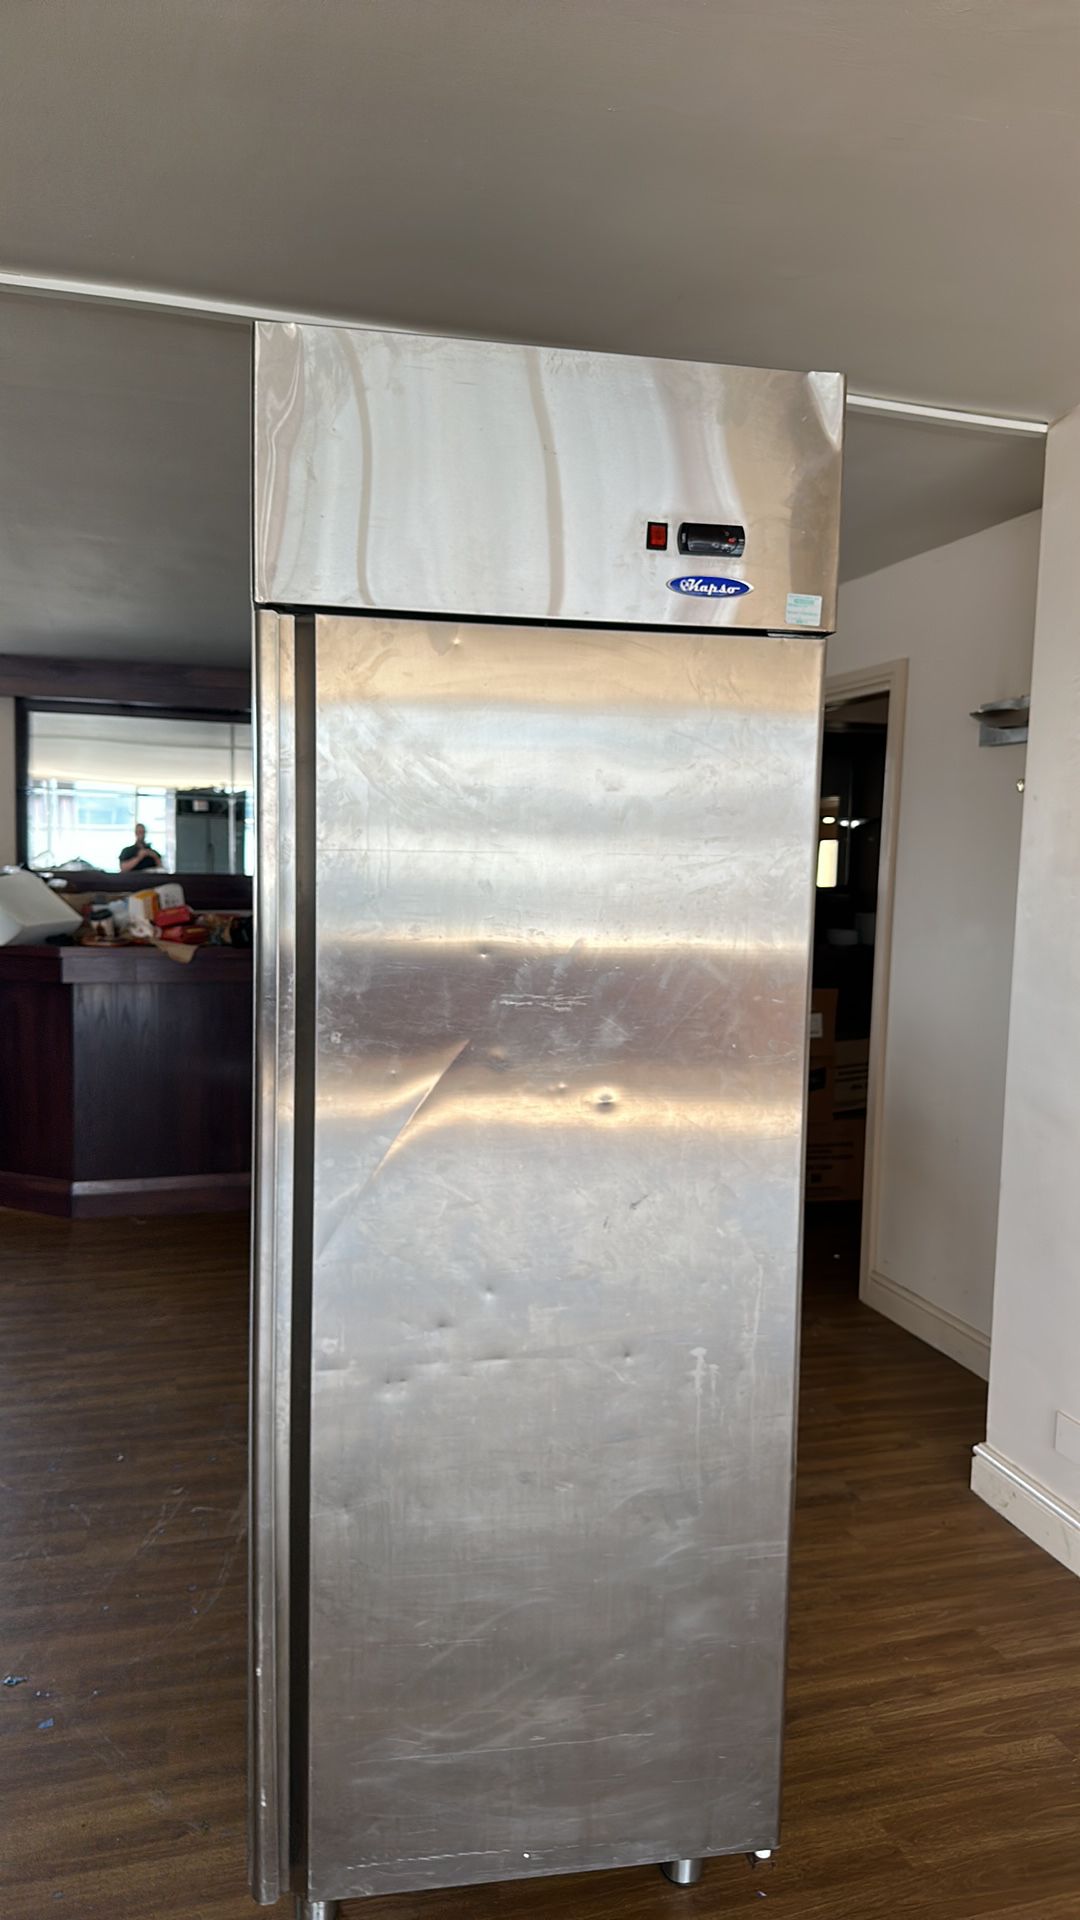 KAPSO Refrigeration Unit